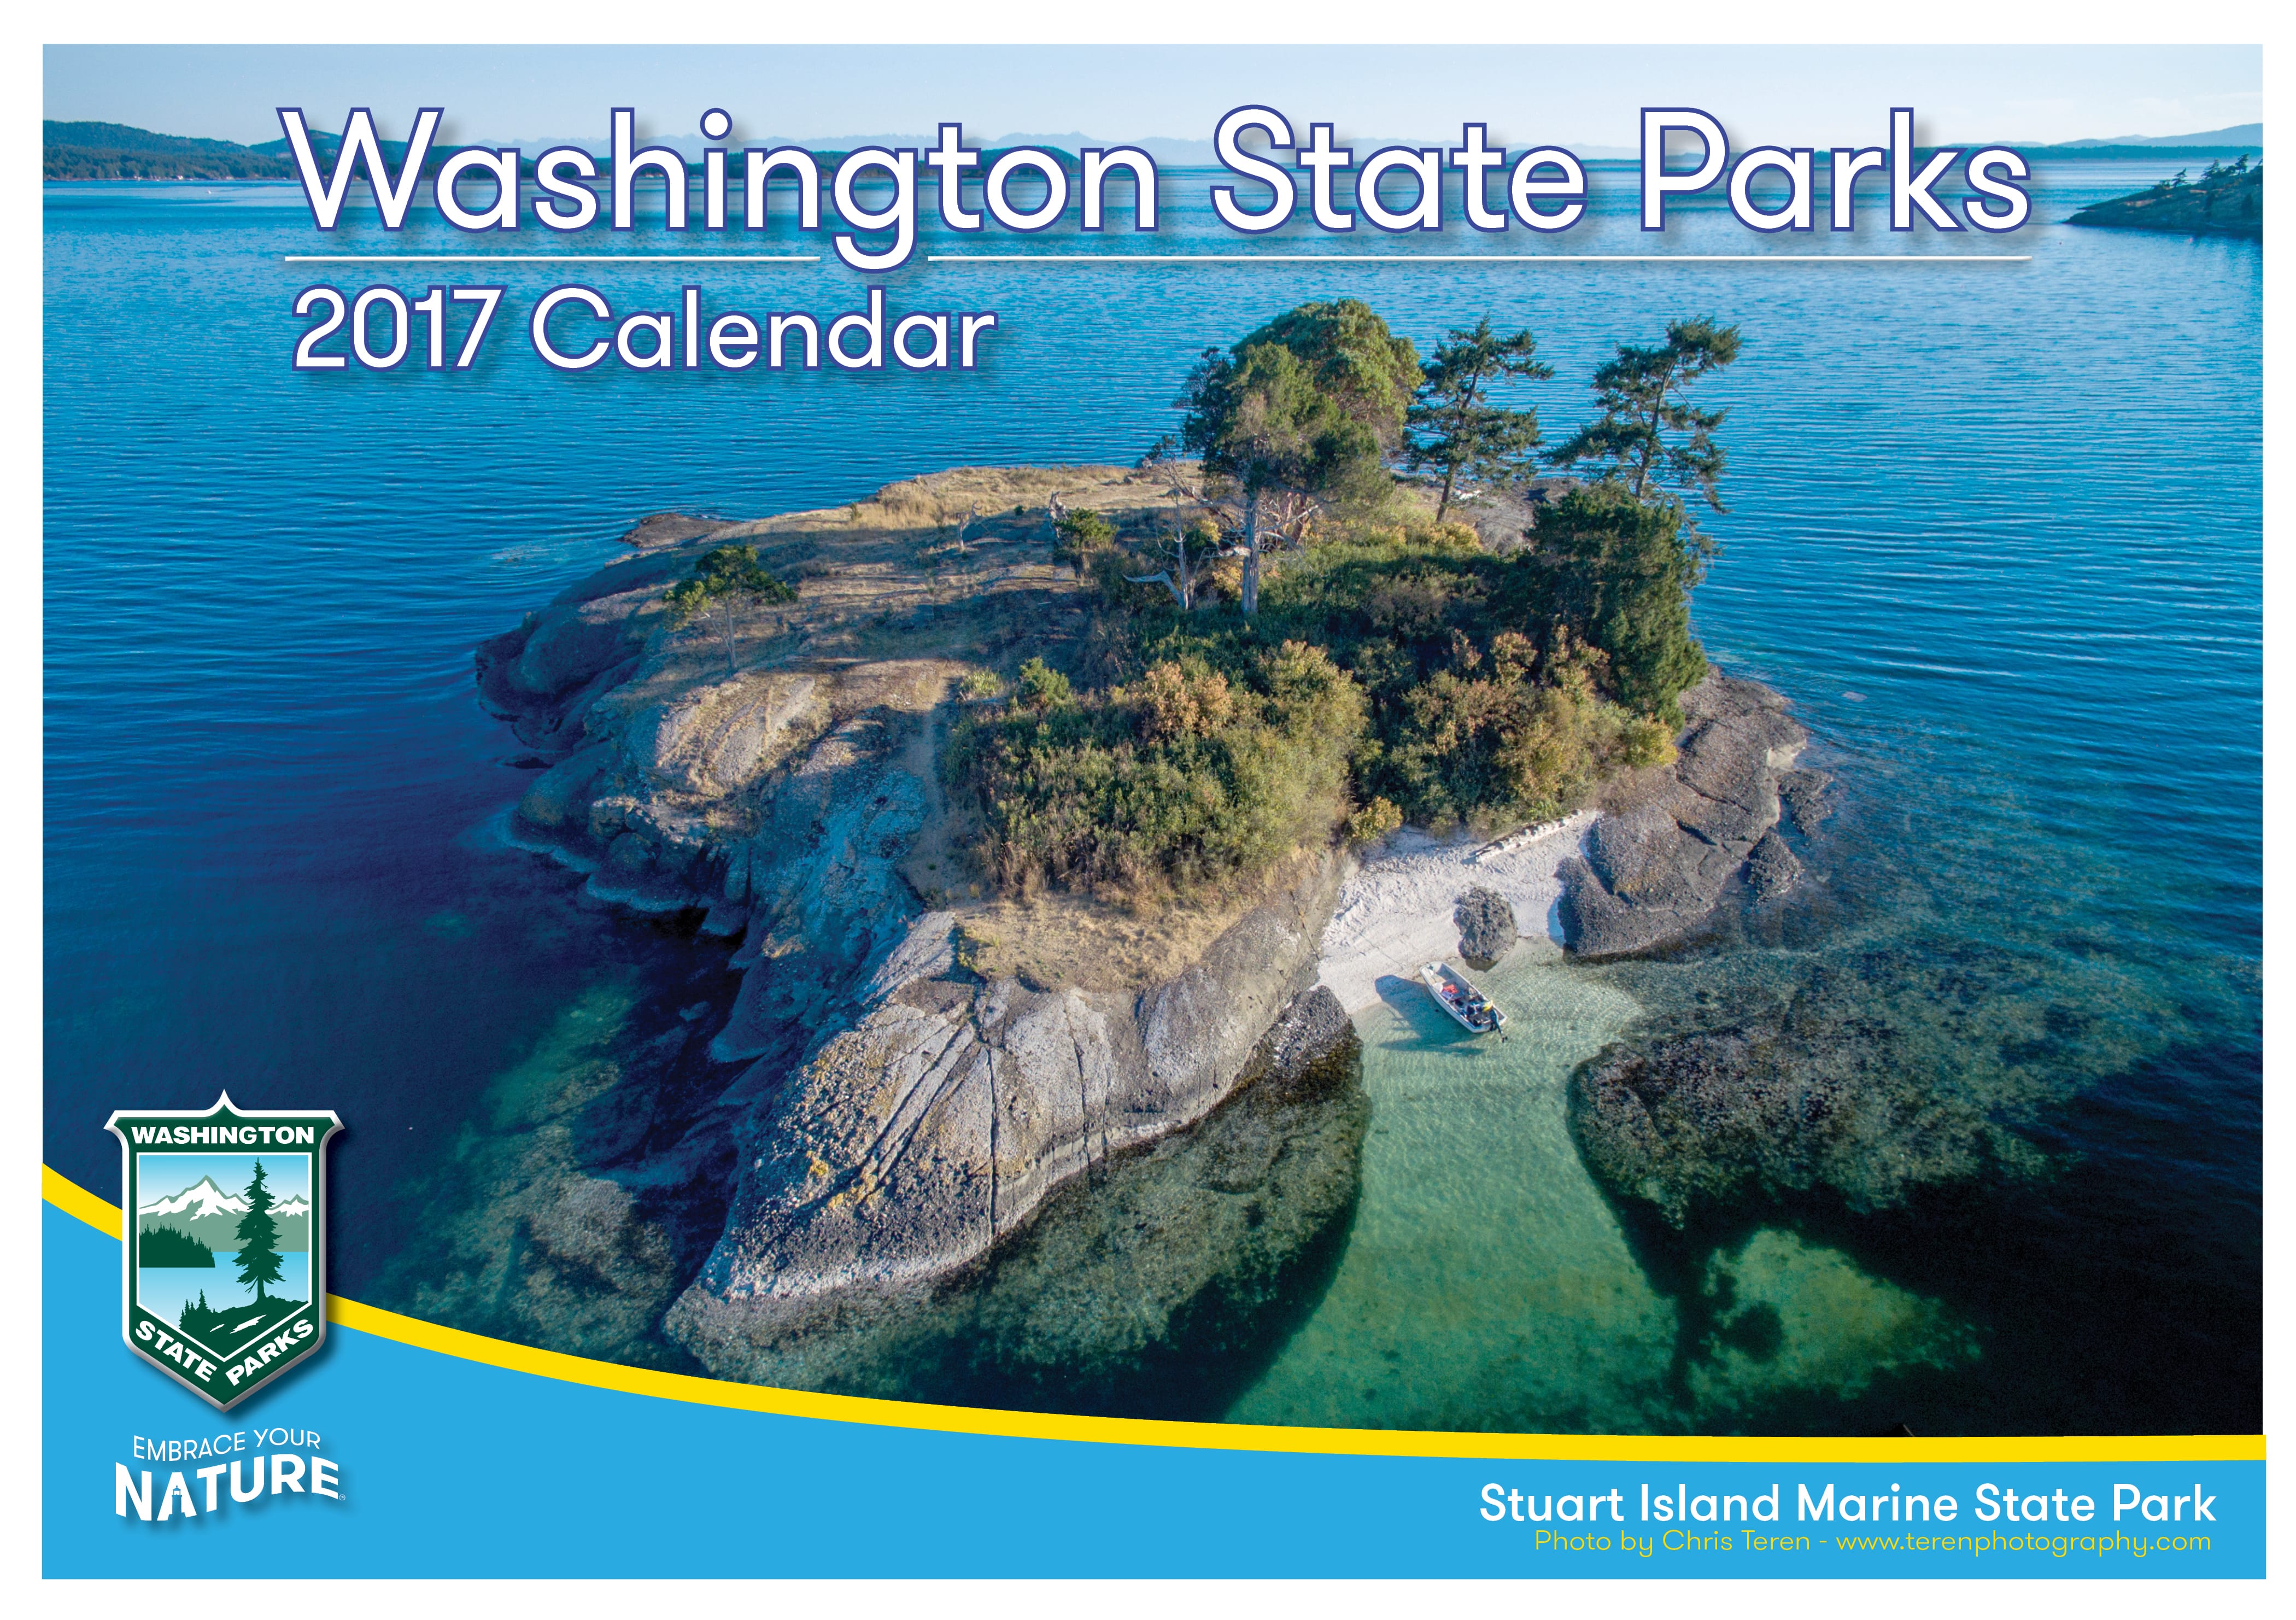 Washington State Parks’ 2017 calendar available The Columbian